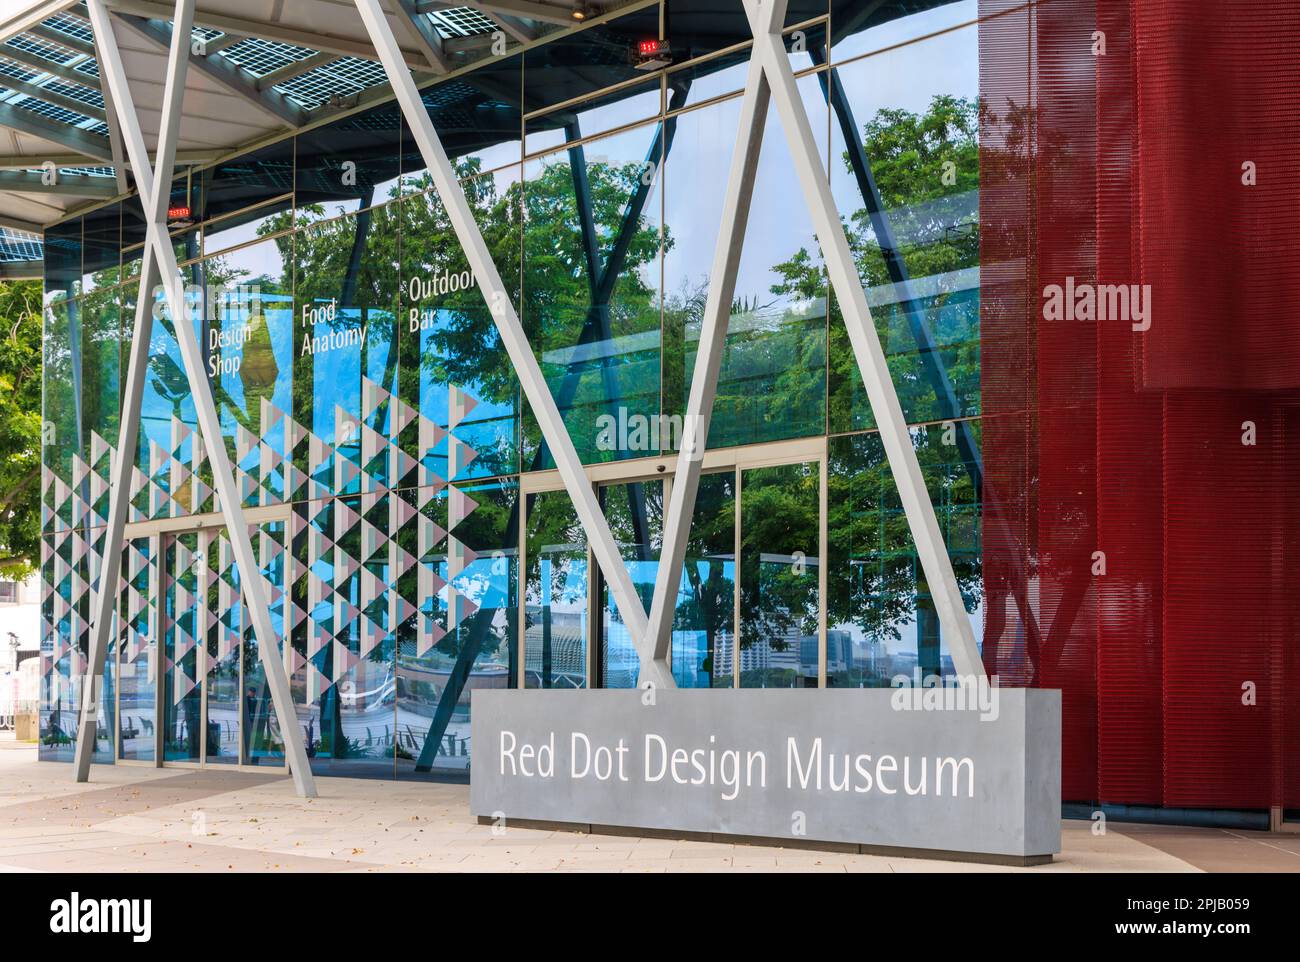 Red Dot Design Museum, Marina Bay, Singapour Banque D'Images